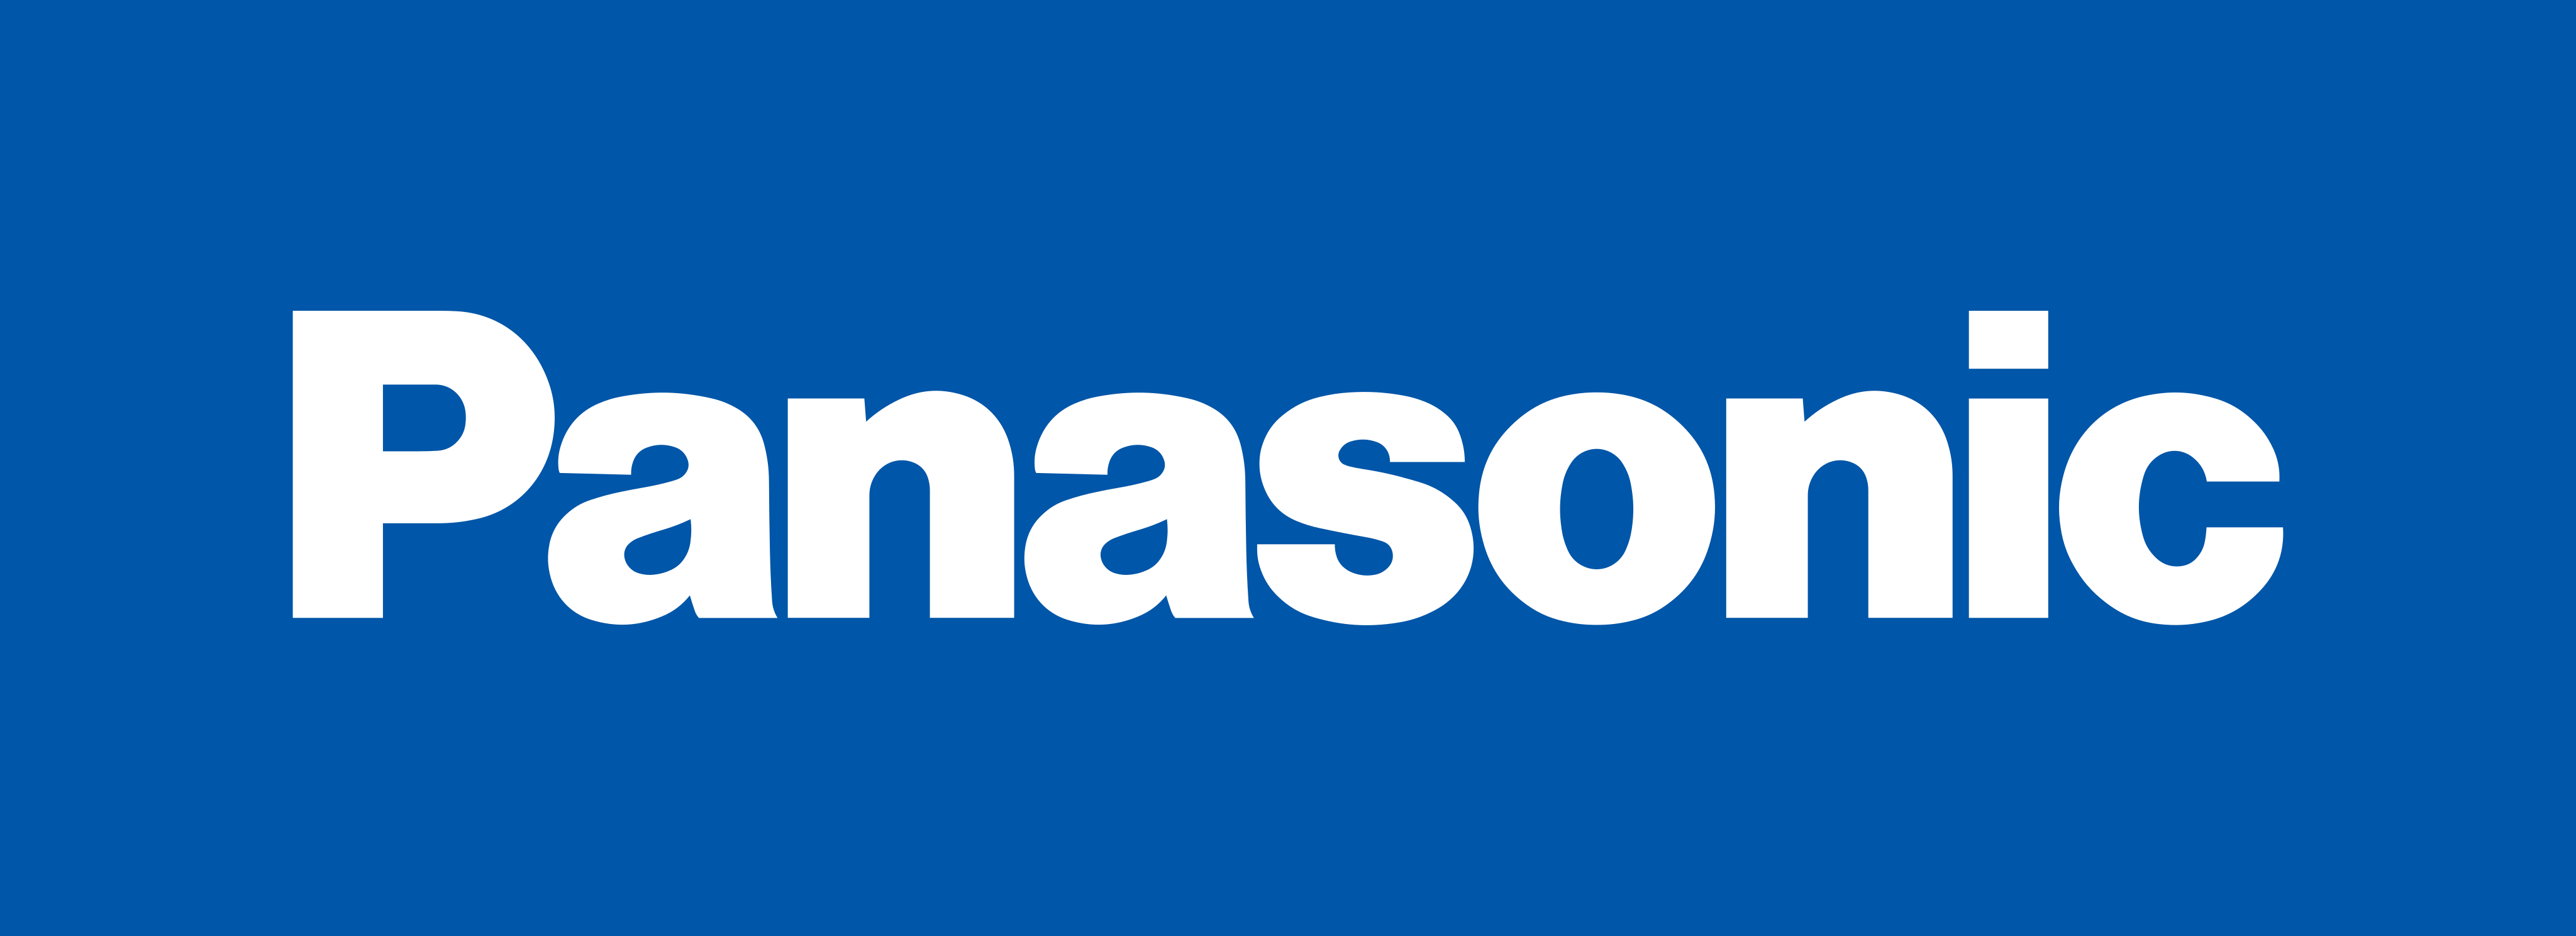 Panasonic Logo PNG - 176754